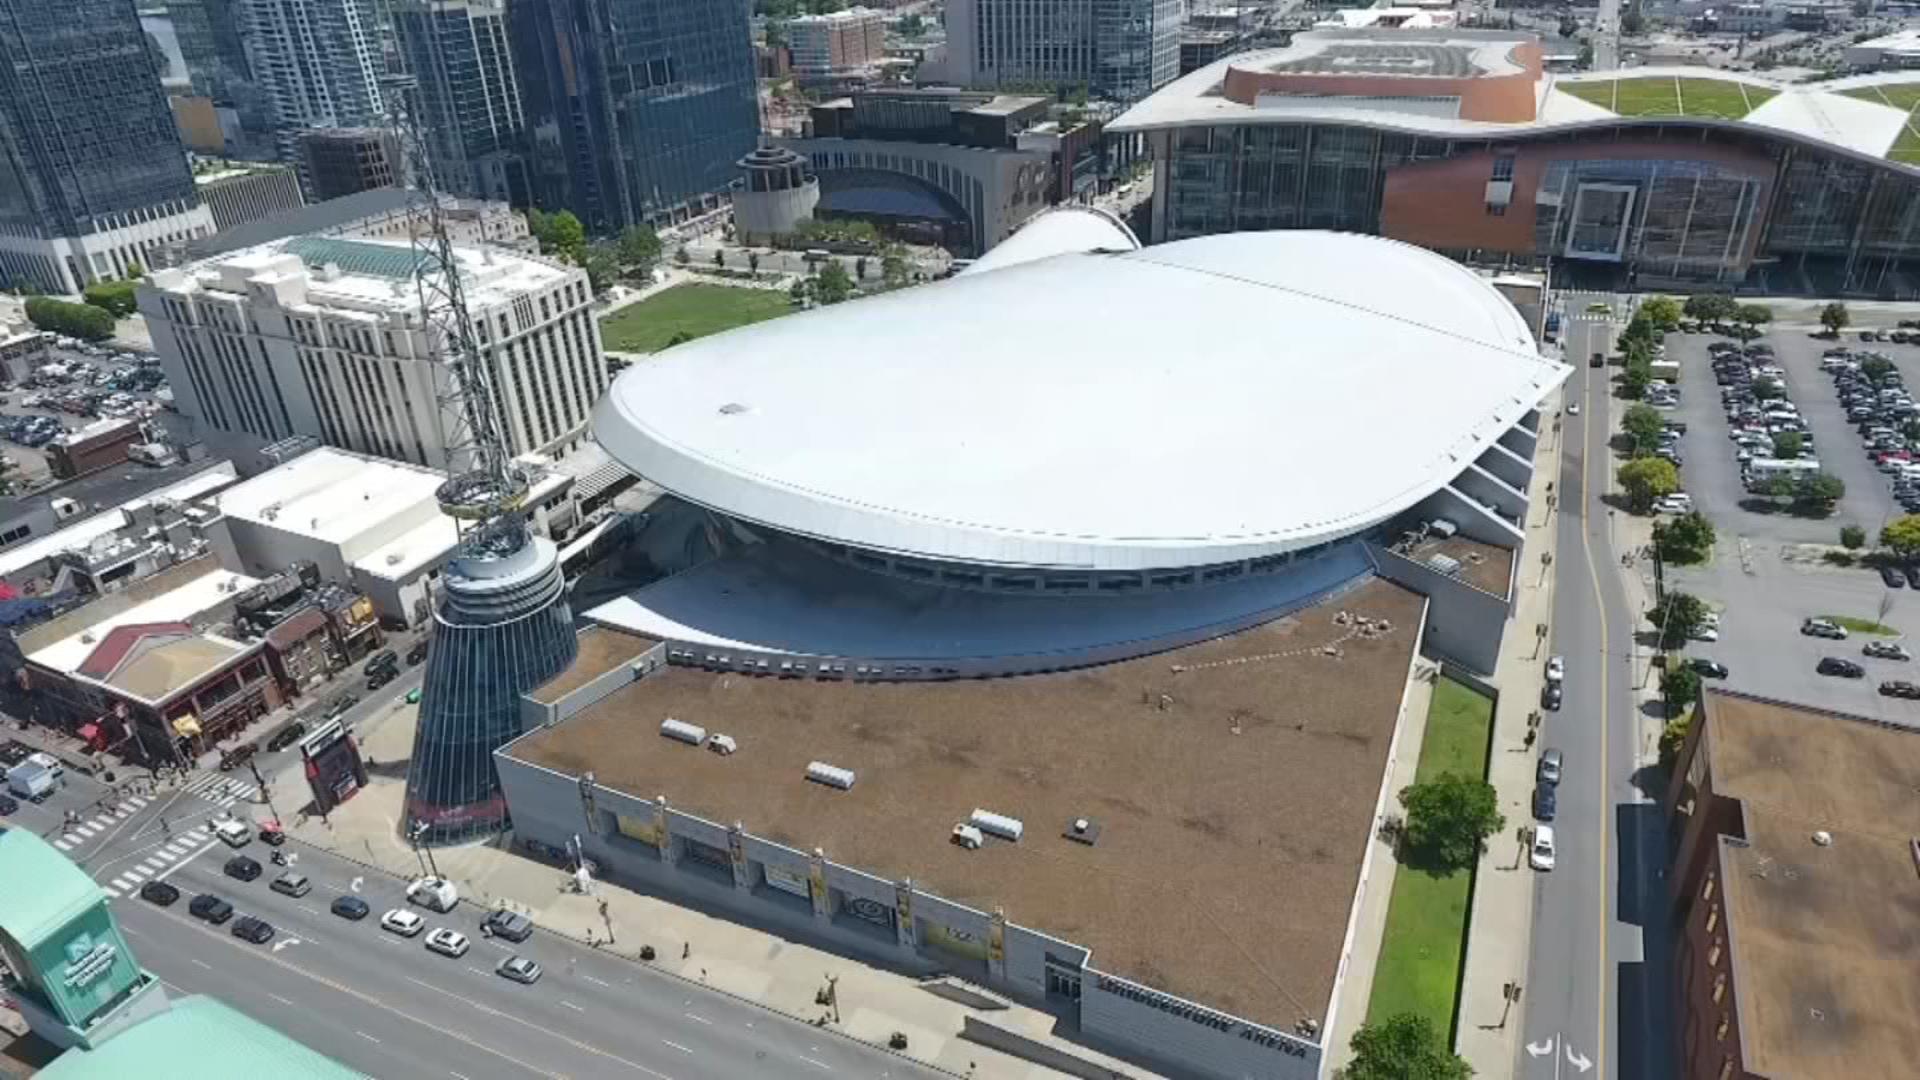 After flood, Nashville Predators return to a drying Bridgestone Arena